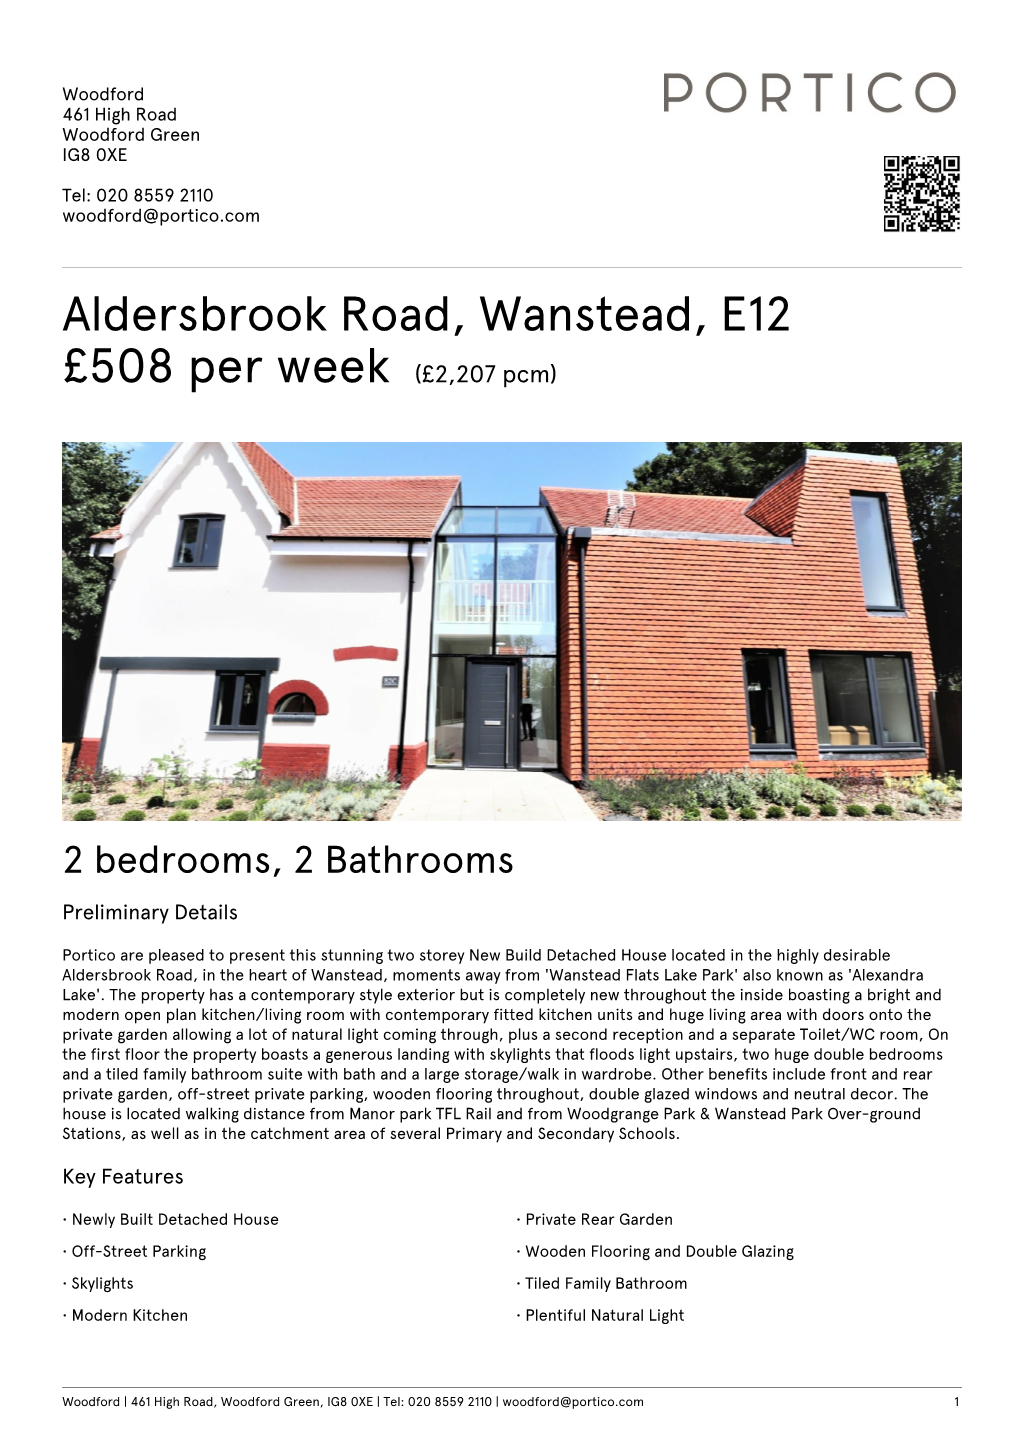 Aldersbrook Road, Wanstead, E12 £508 Per Week